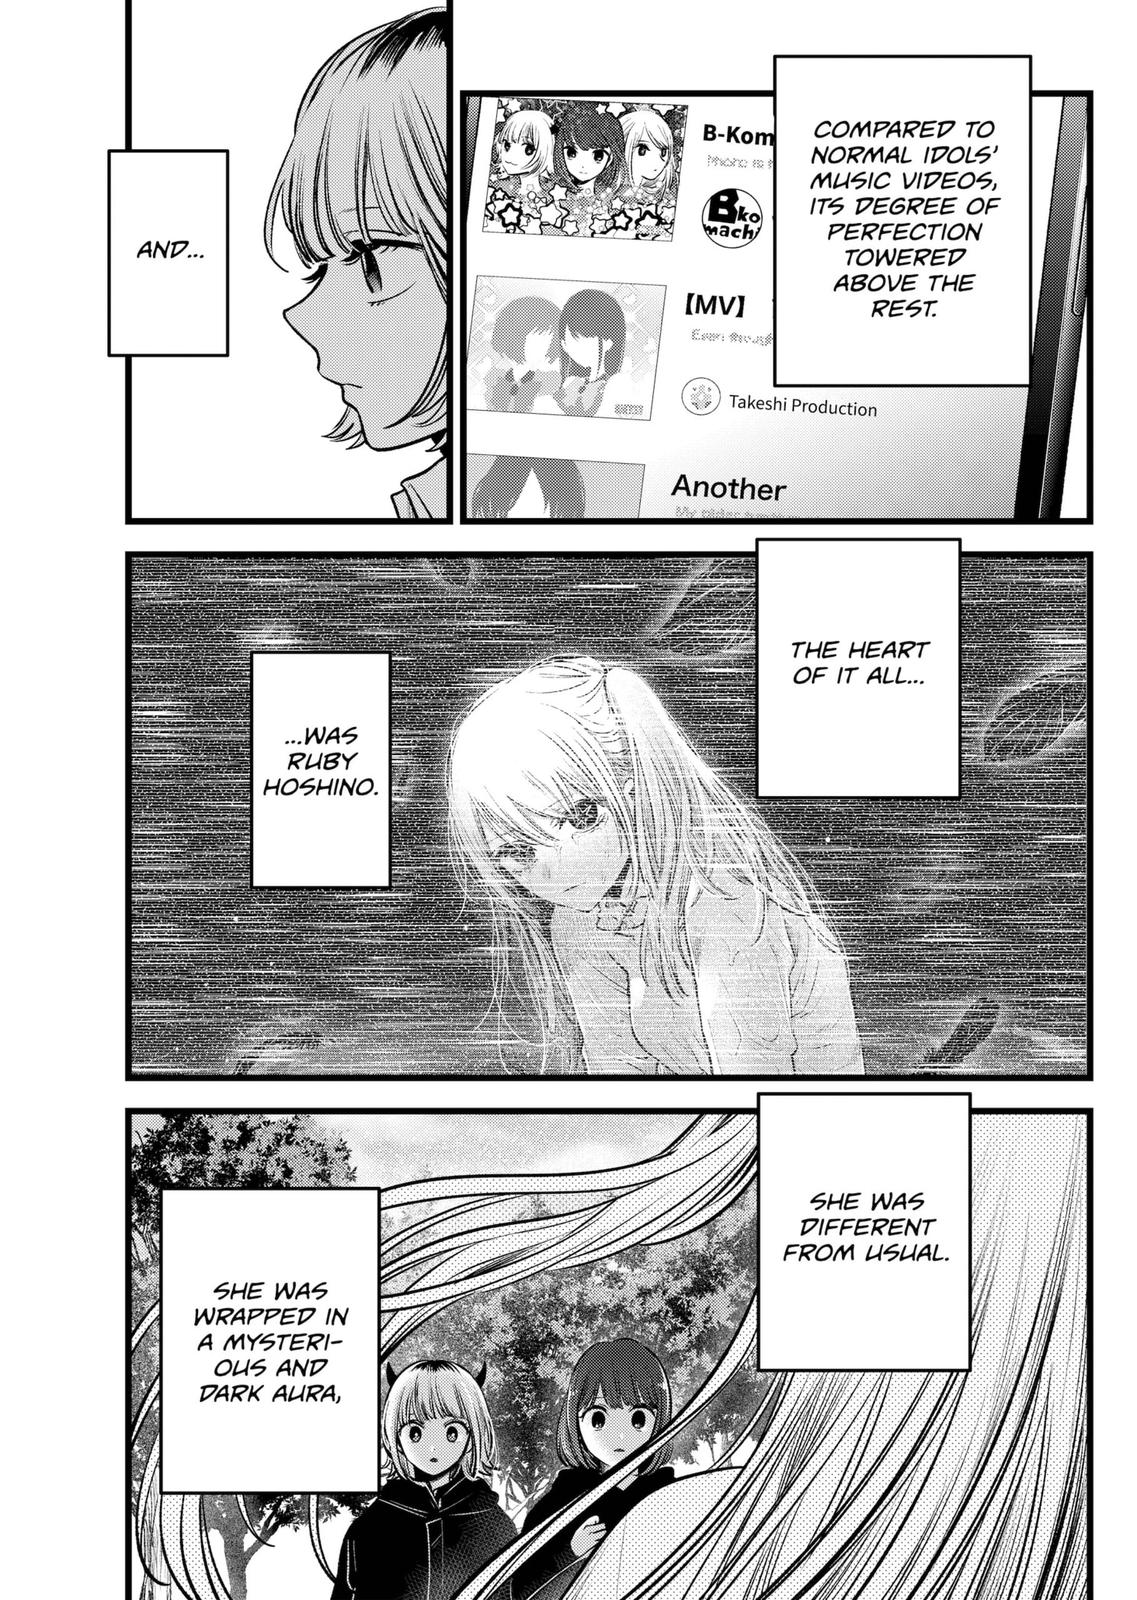 Oshi no Ko (YOKOYARI Mengo), Chapter 36  TcbScans Net - TCBscans - Free  Manga Online in High Quality